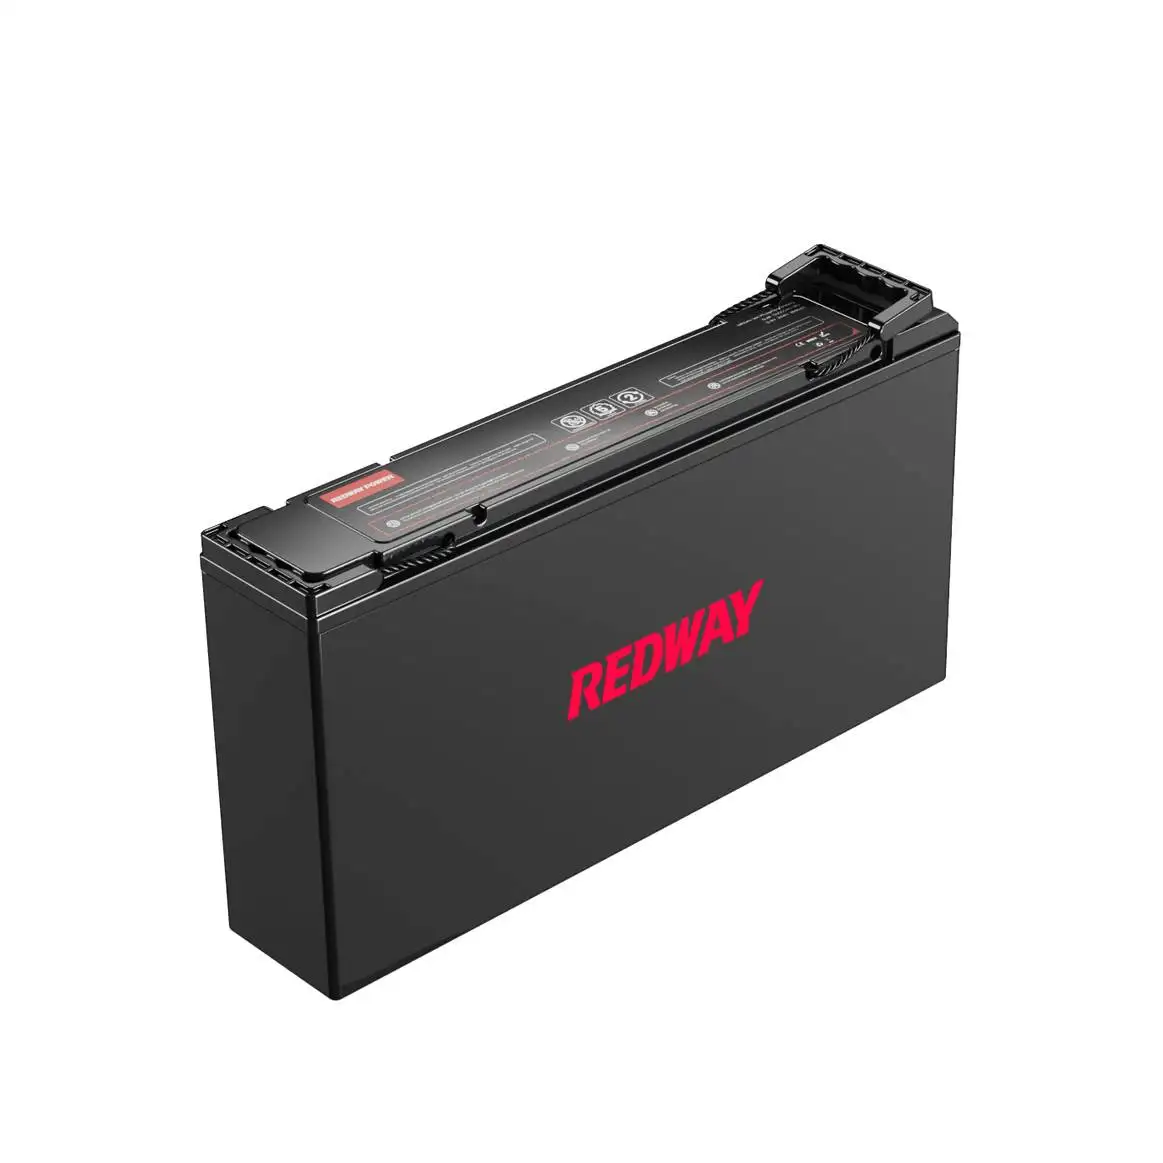 redway-12v150ah-eu China Lithium Iron Battery Manufacturer, LiFePO4/NCM Battery